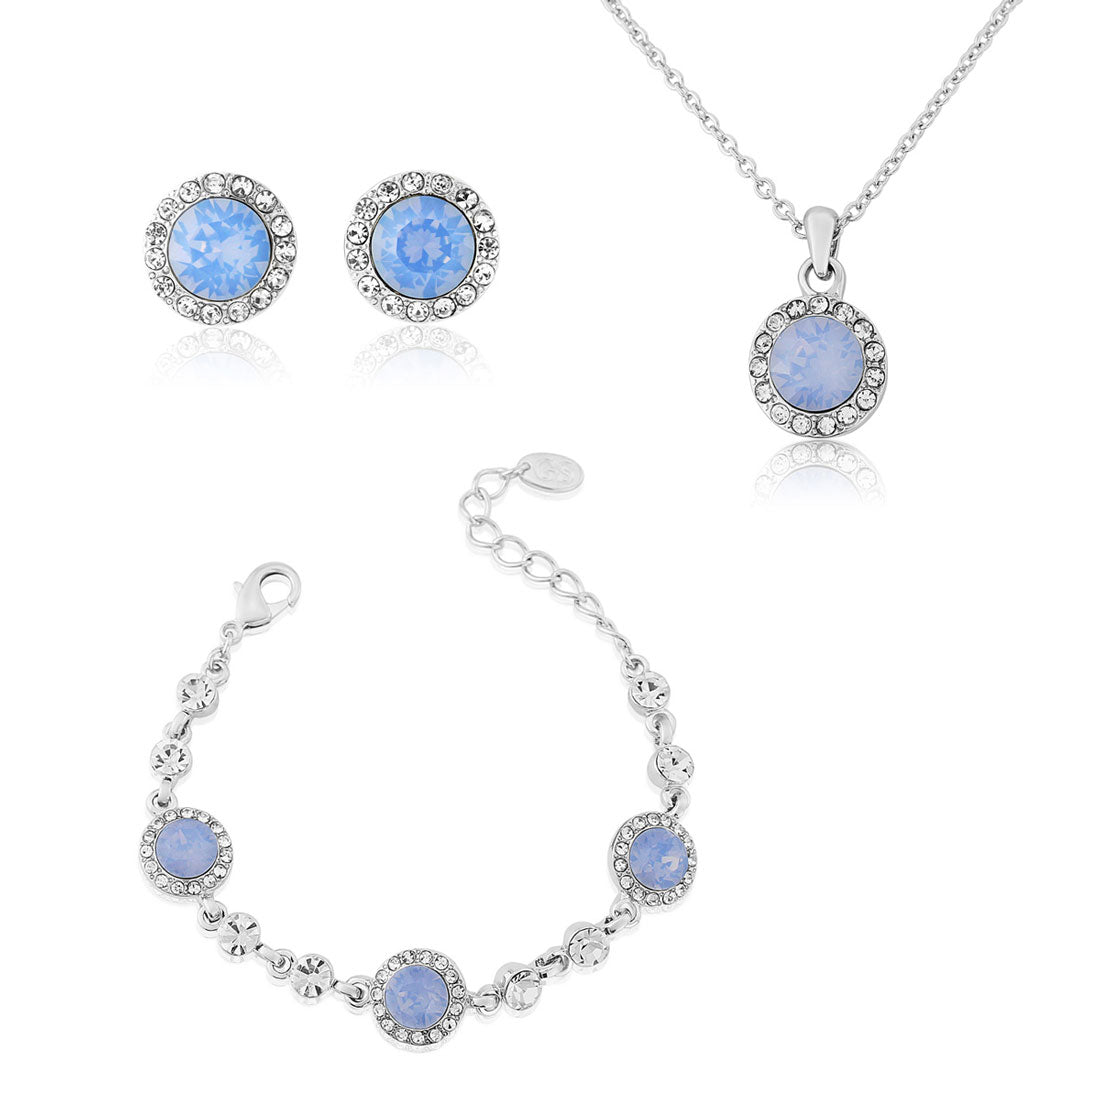 Shimmering Sky pale blue crystal wedding jewellery set